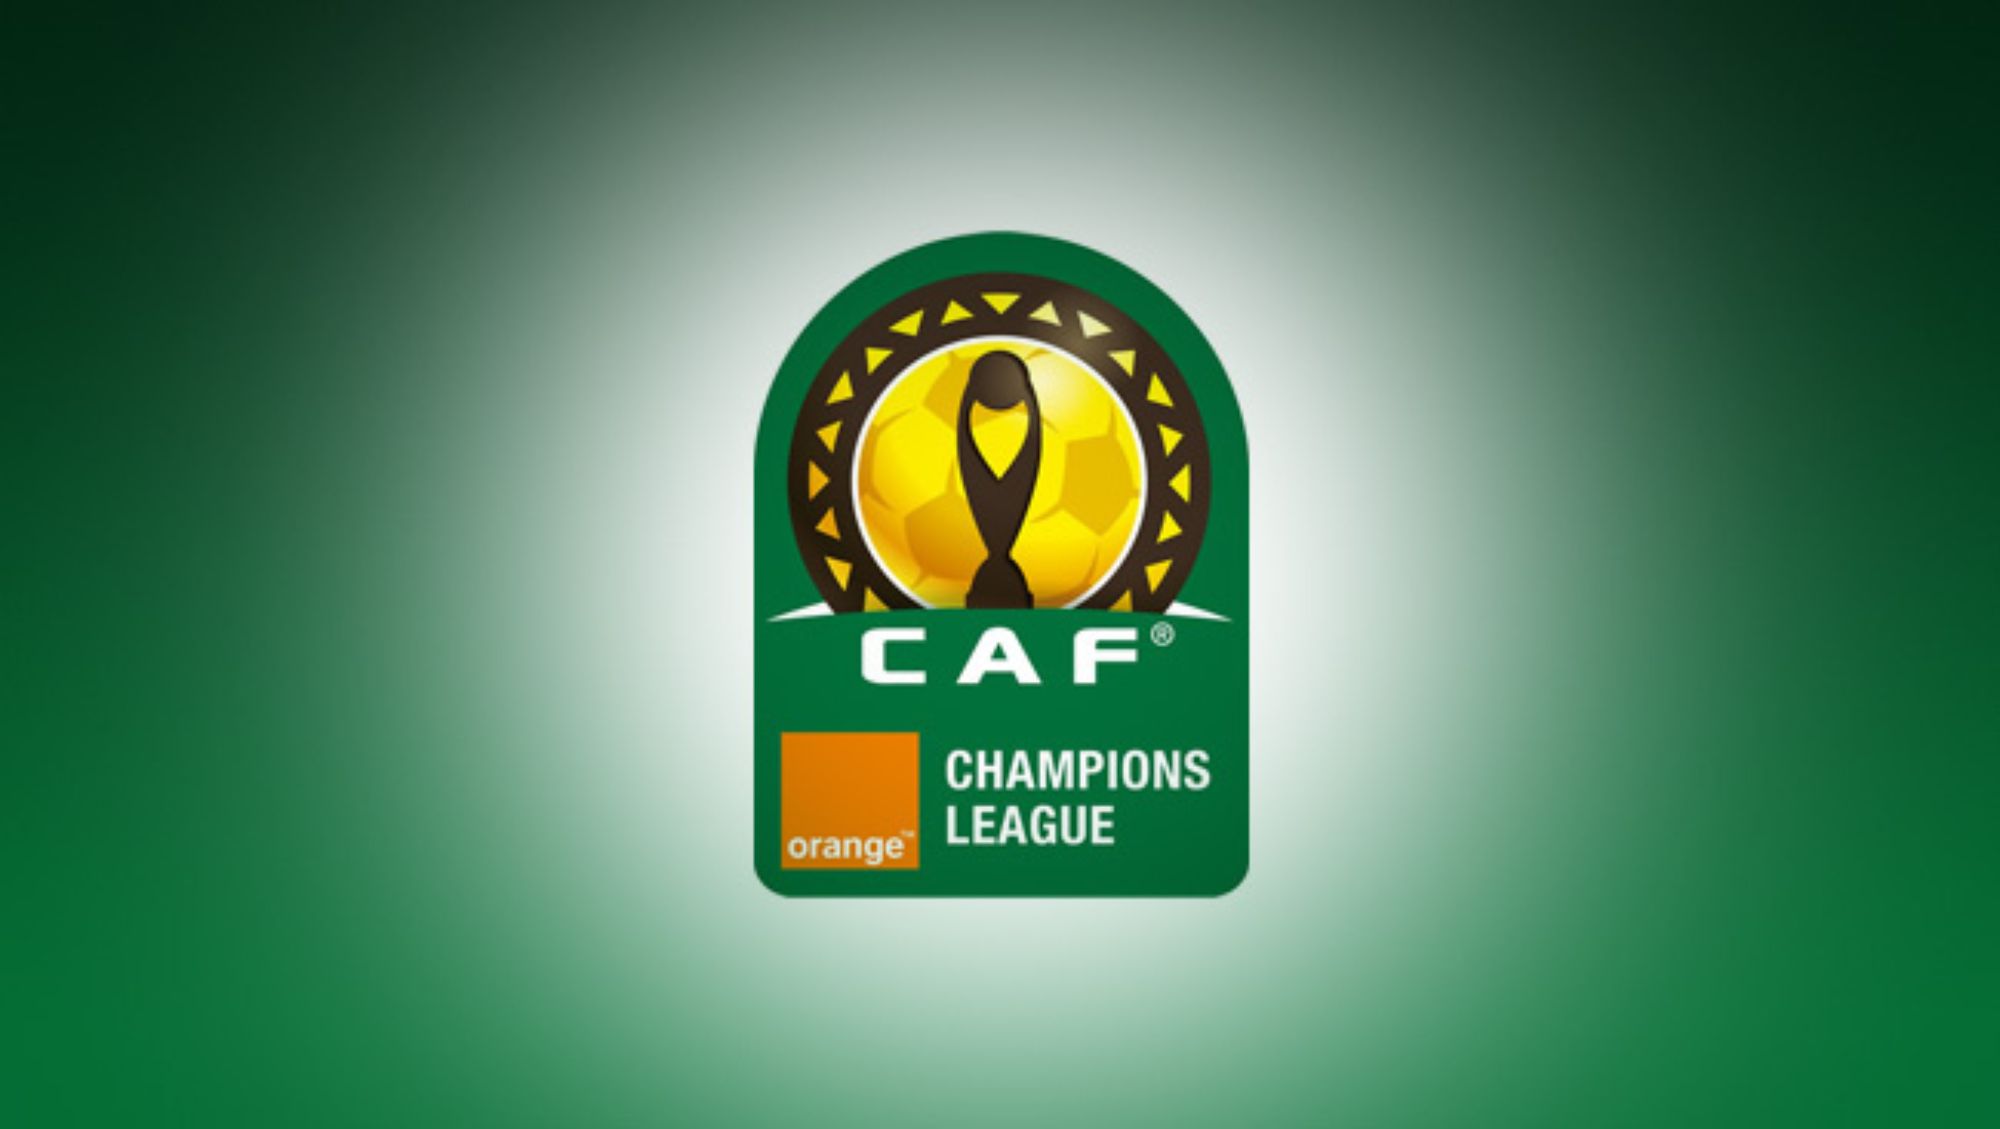 caf-champions-league_fga6034fyfbn1ldxxidt4gu0p